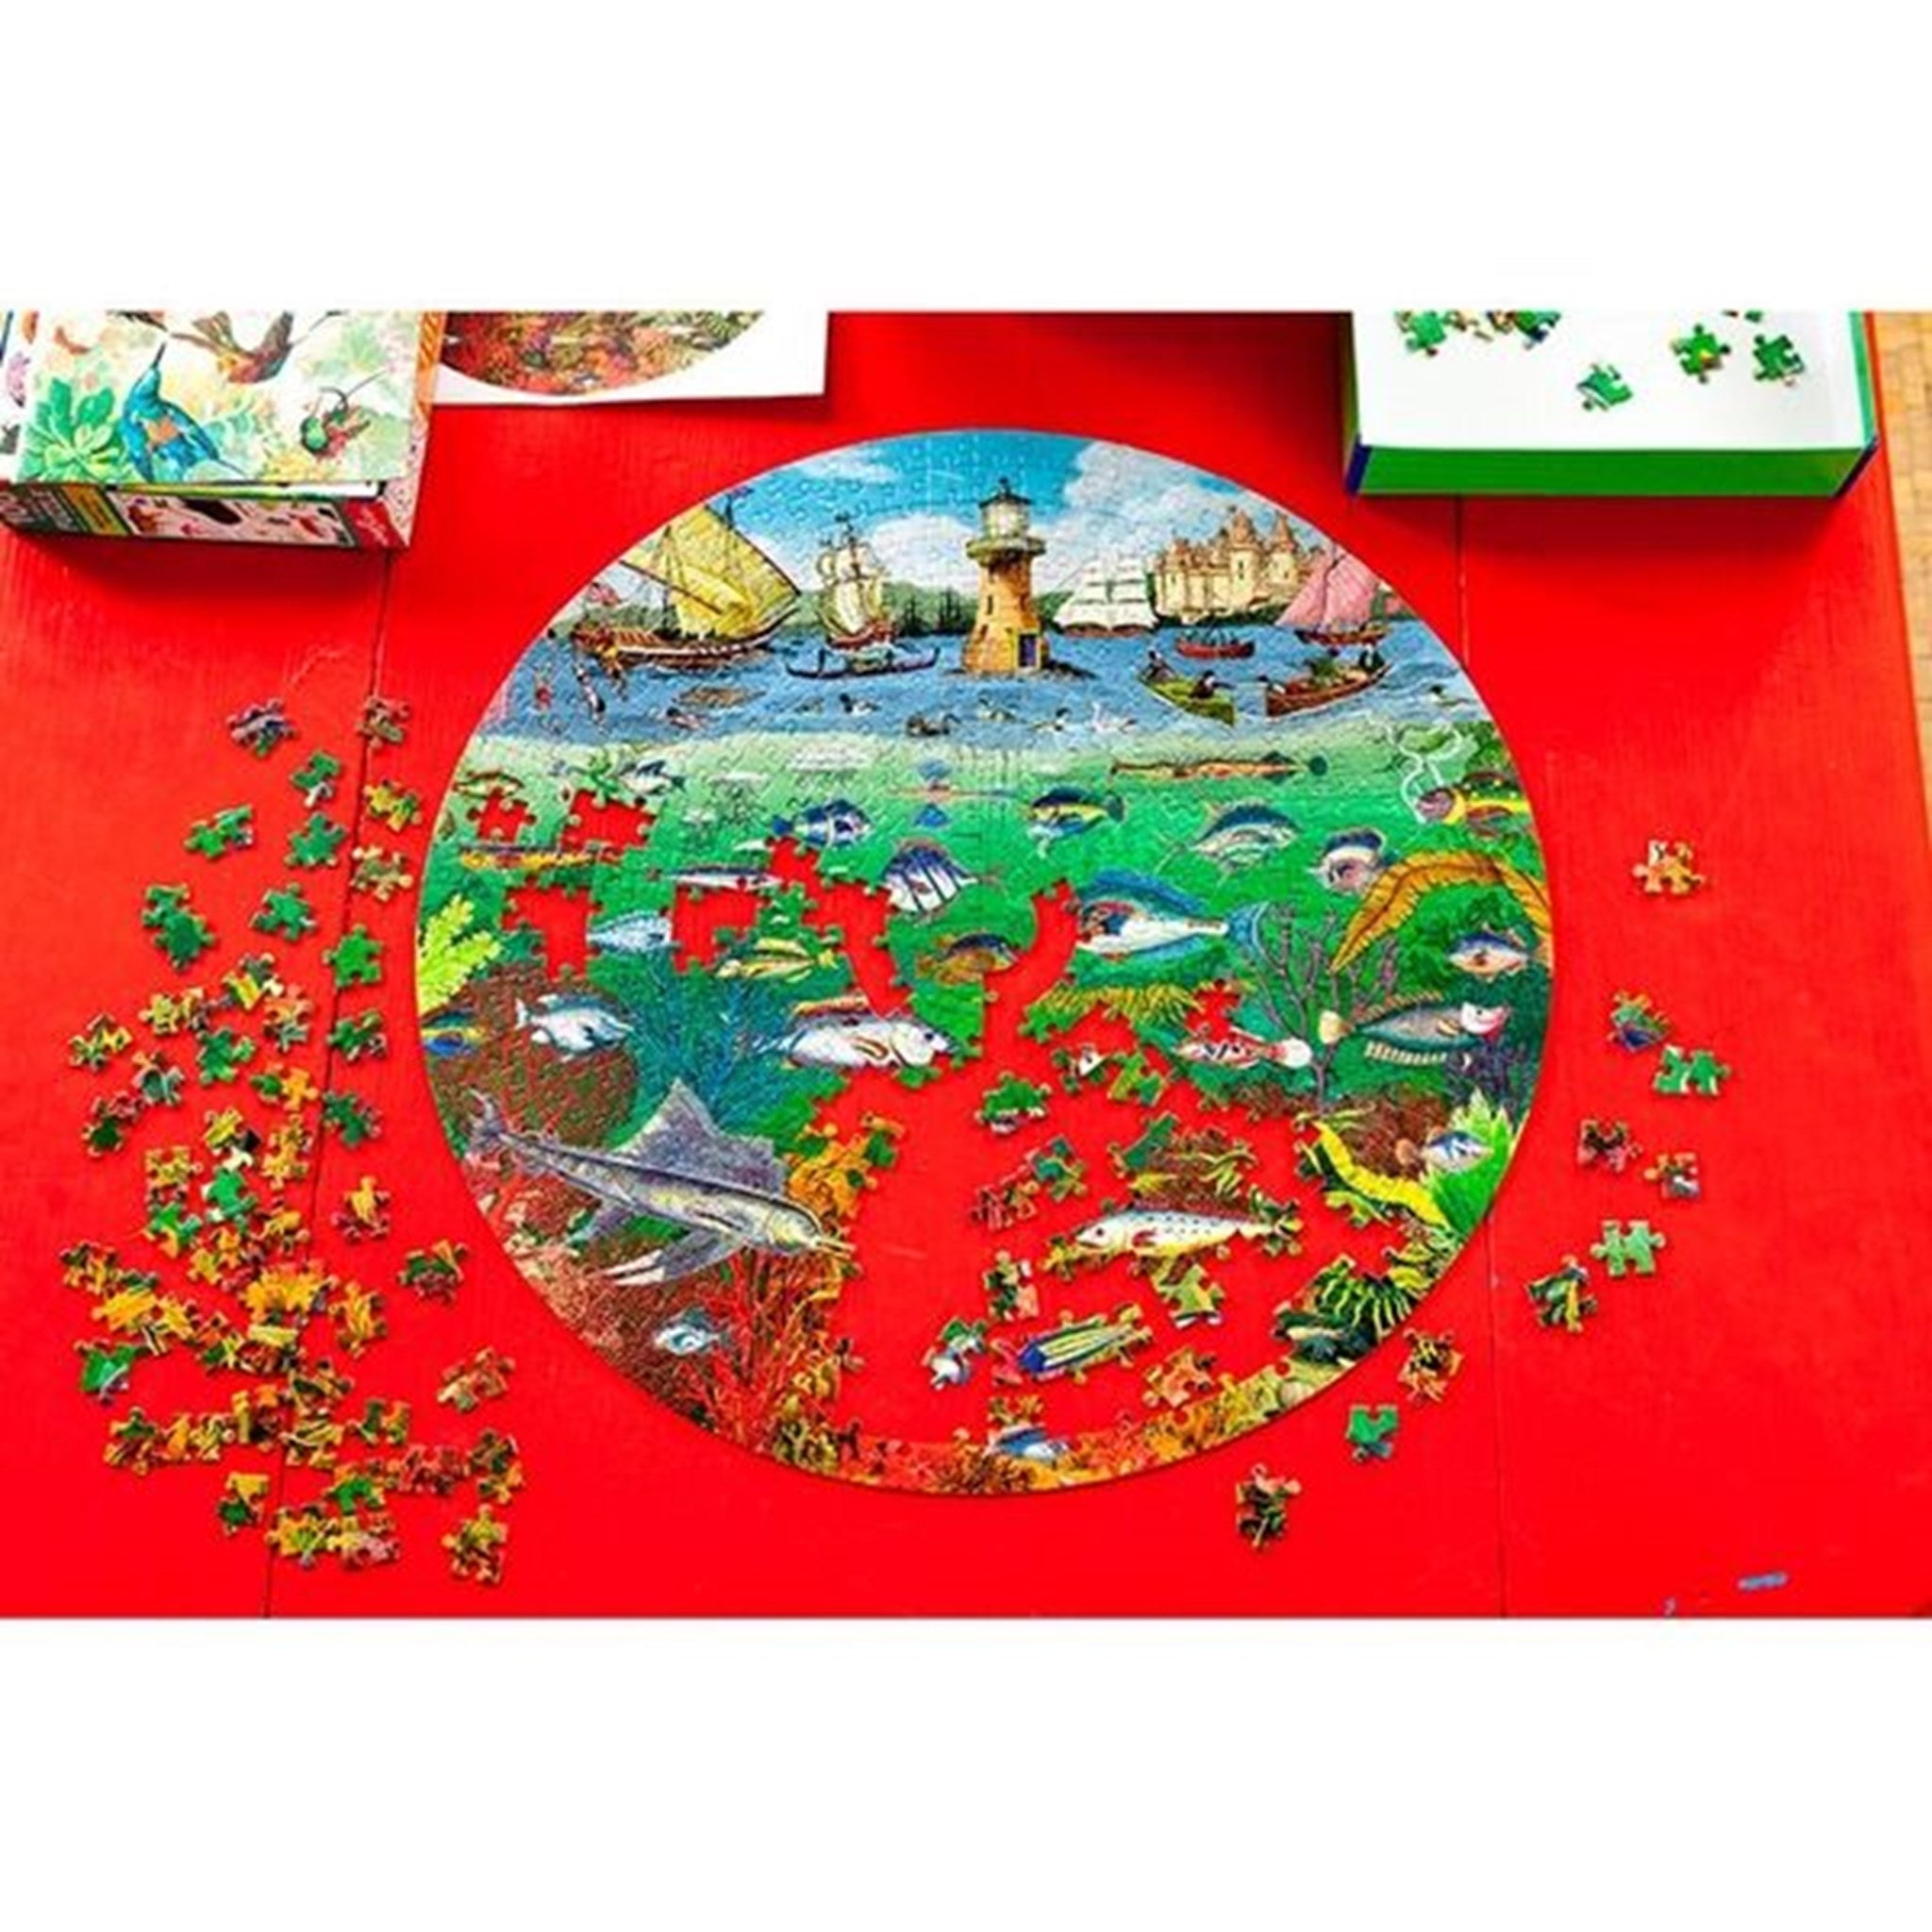 Eeboo Puzzle 500 Pieces - Fish and Boats 4